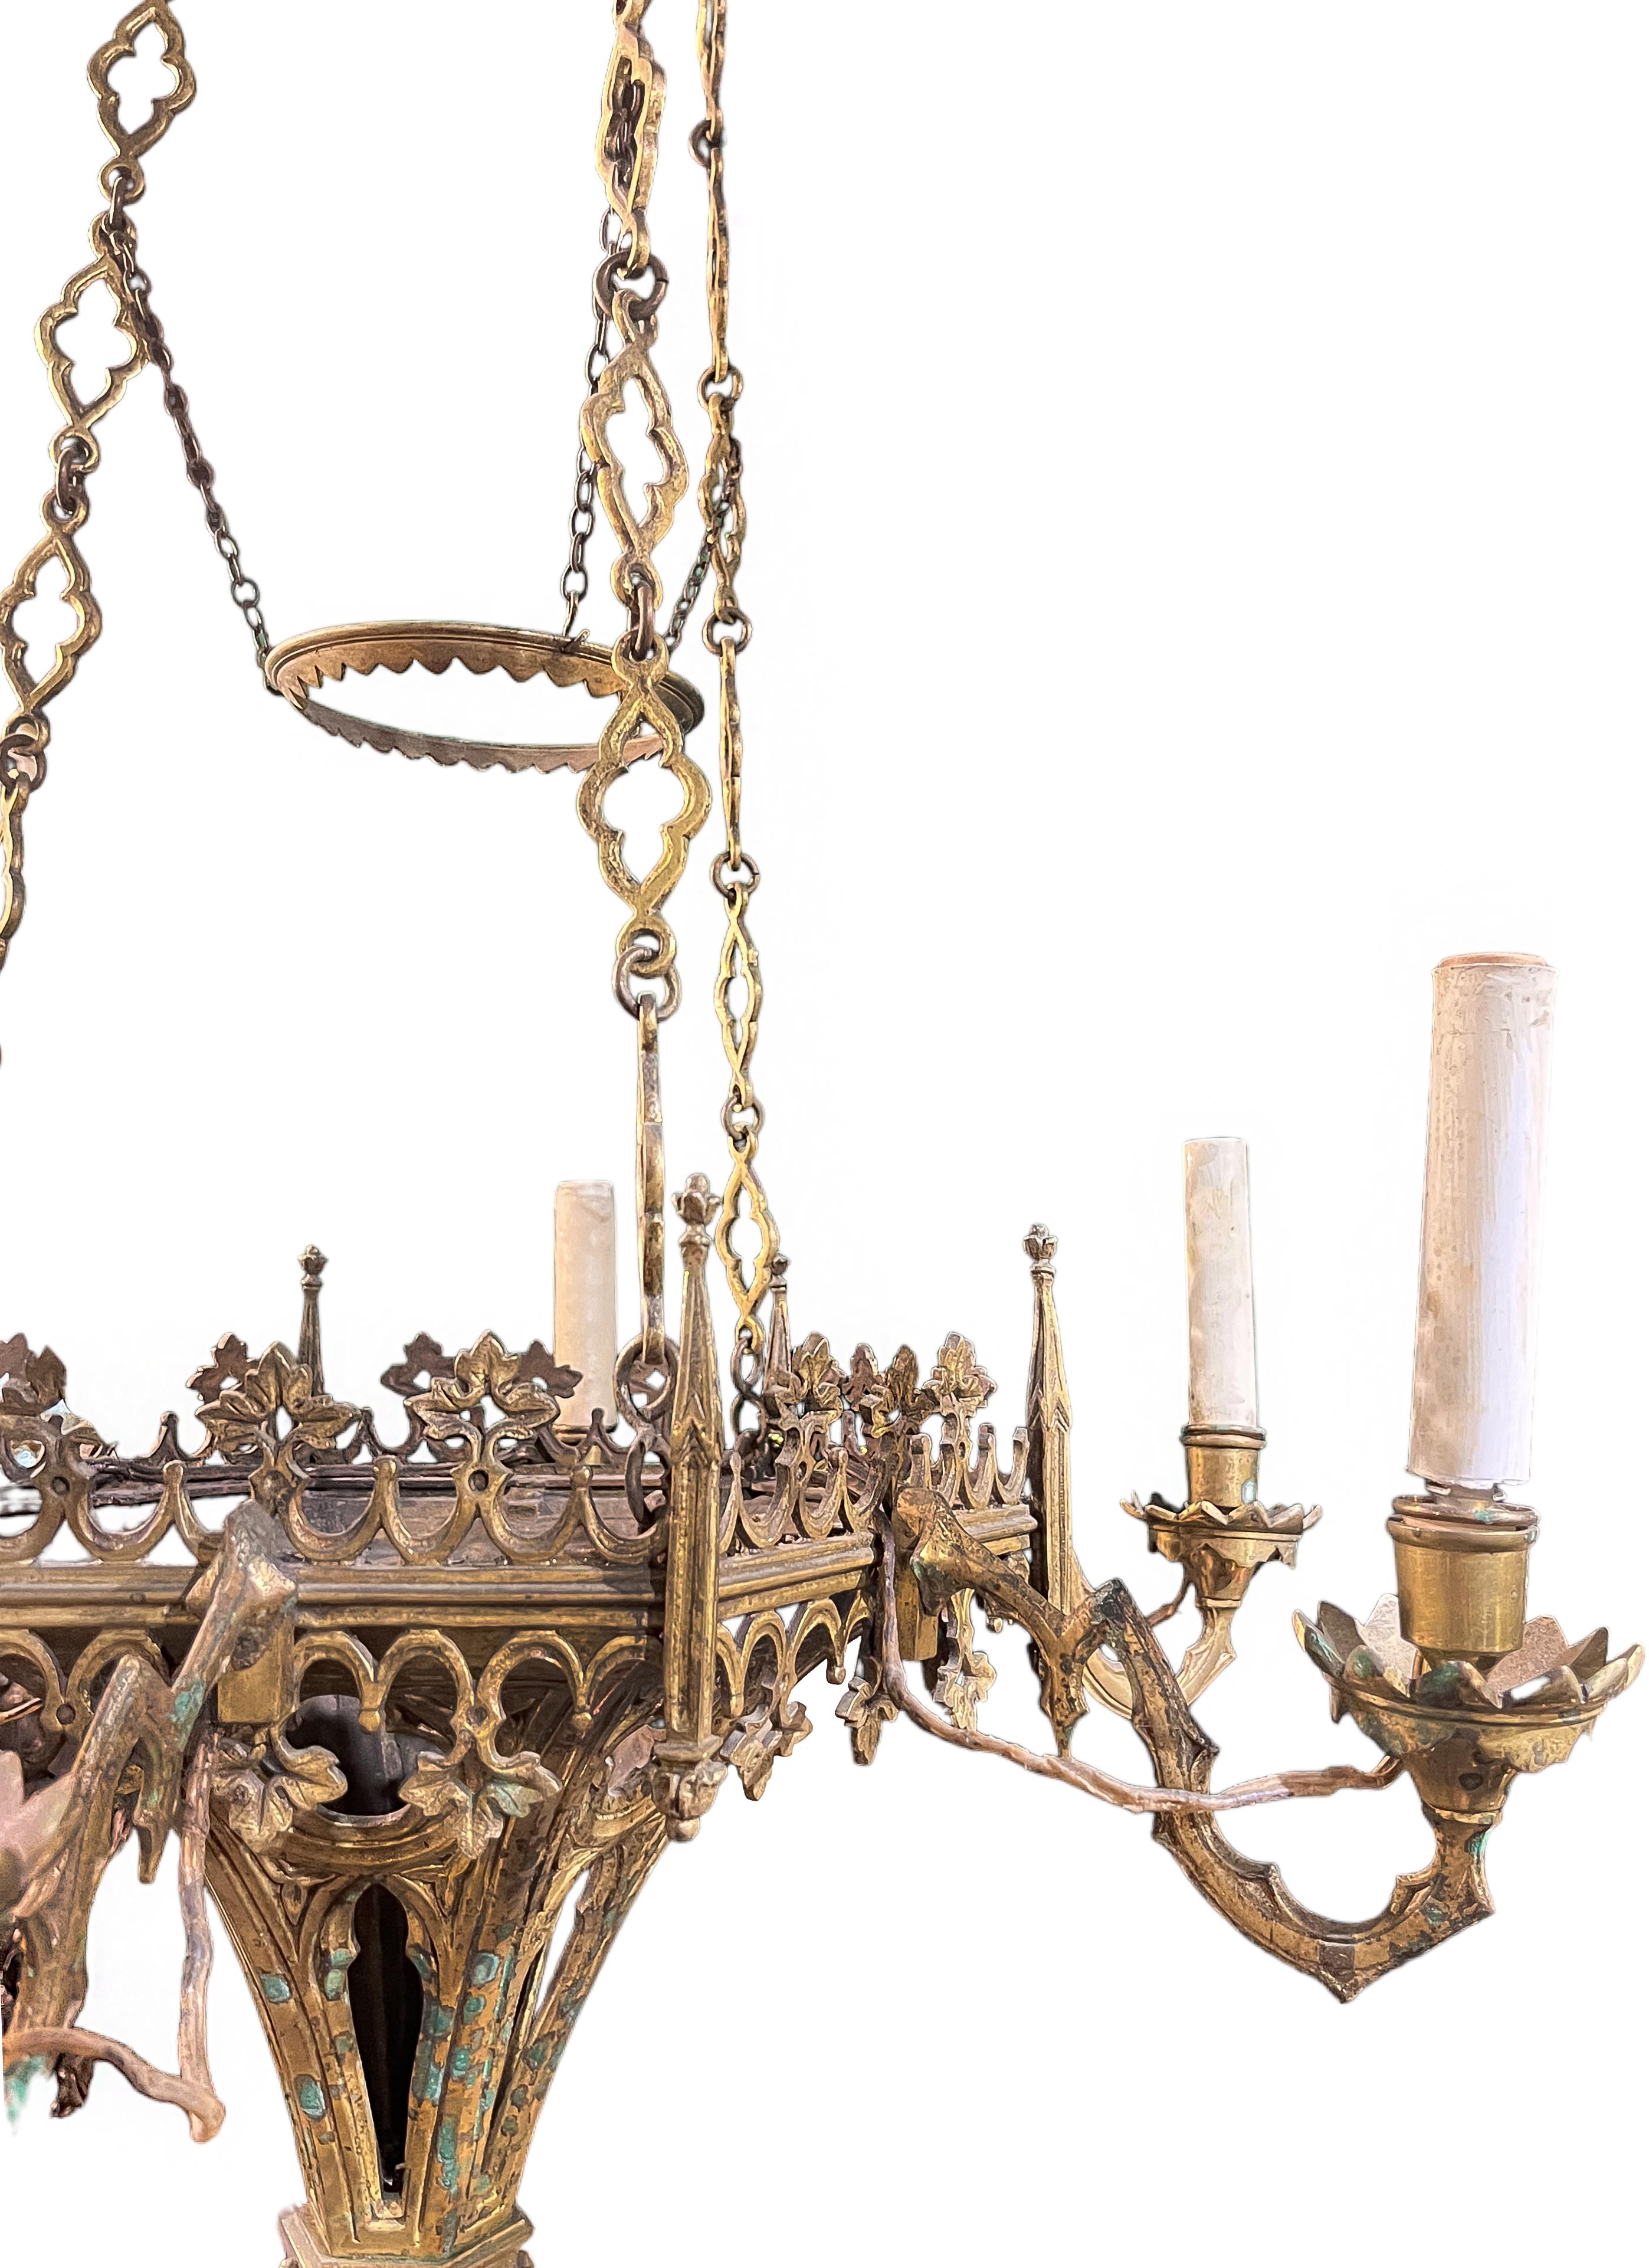 French Elegant Gothic Revival Gilt Bronze Six Light Chandelier For Sale